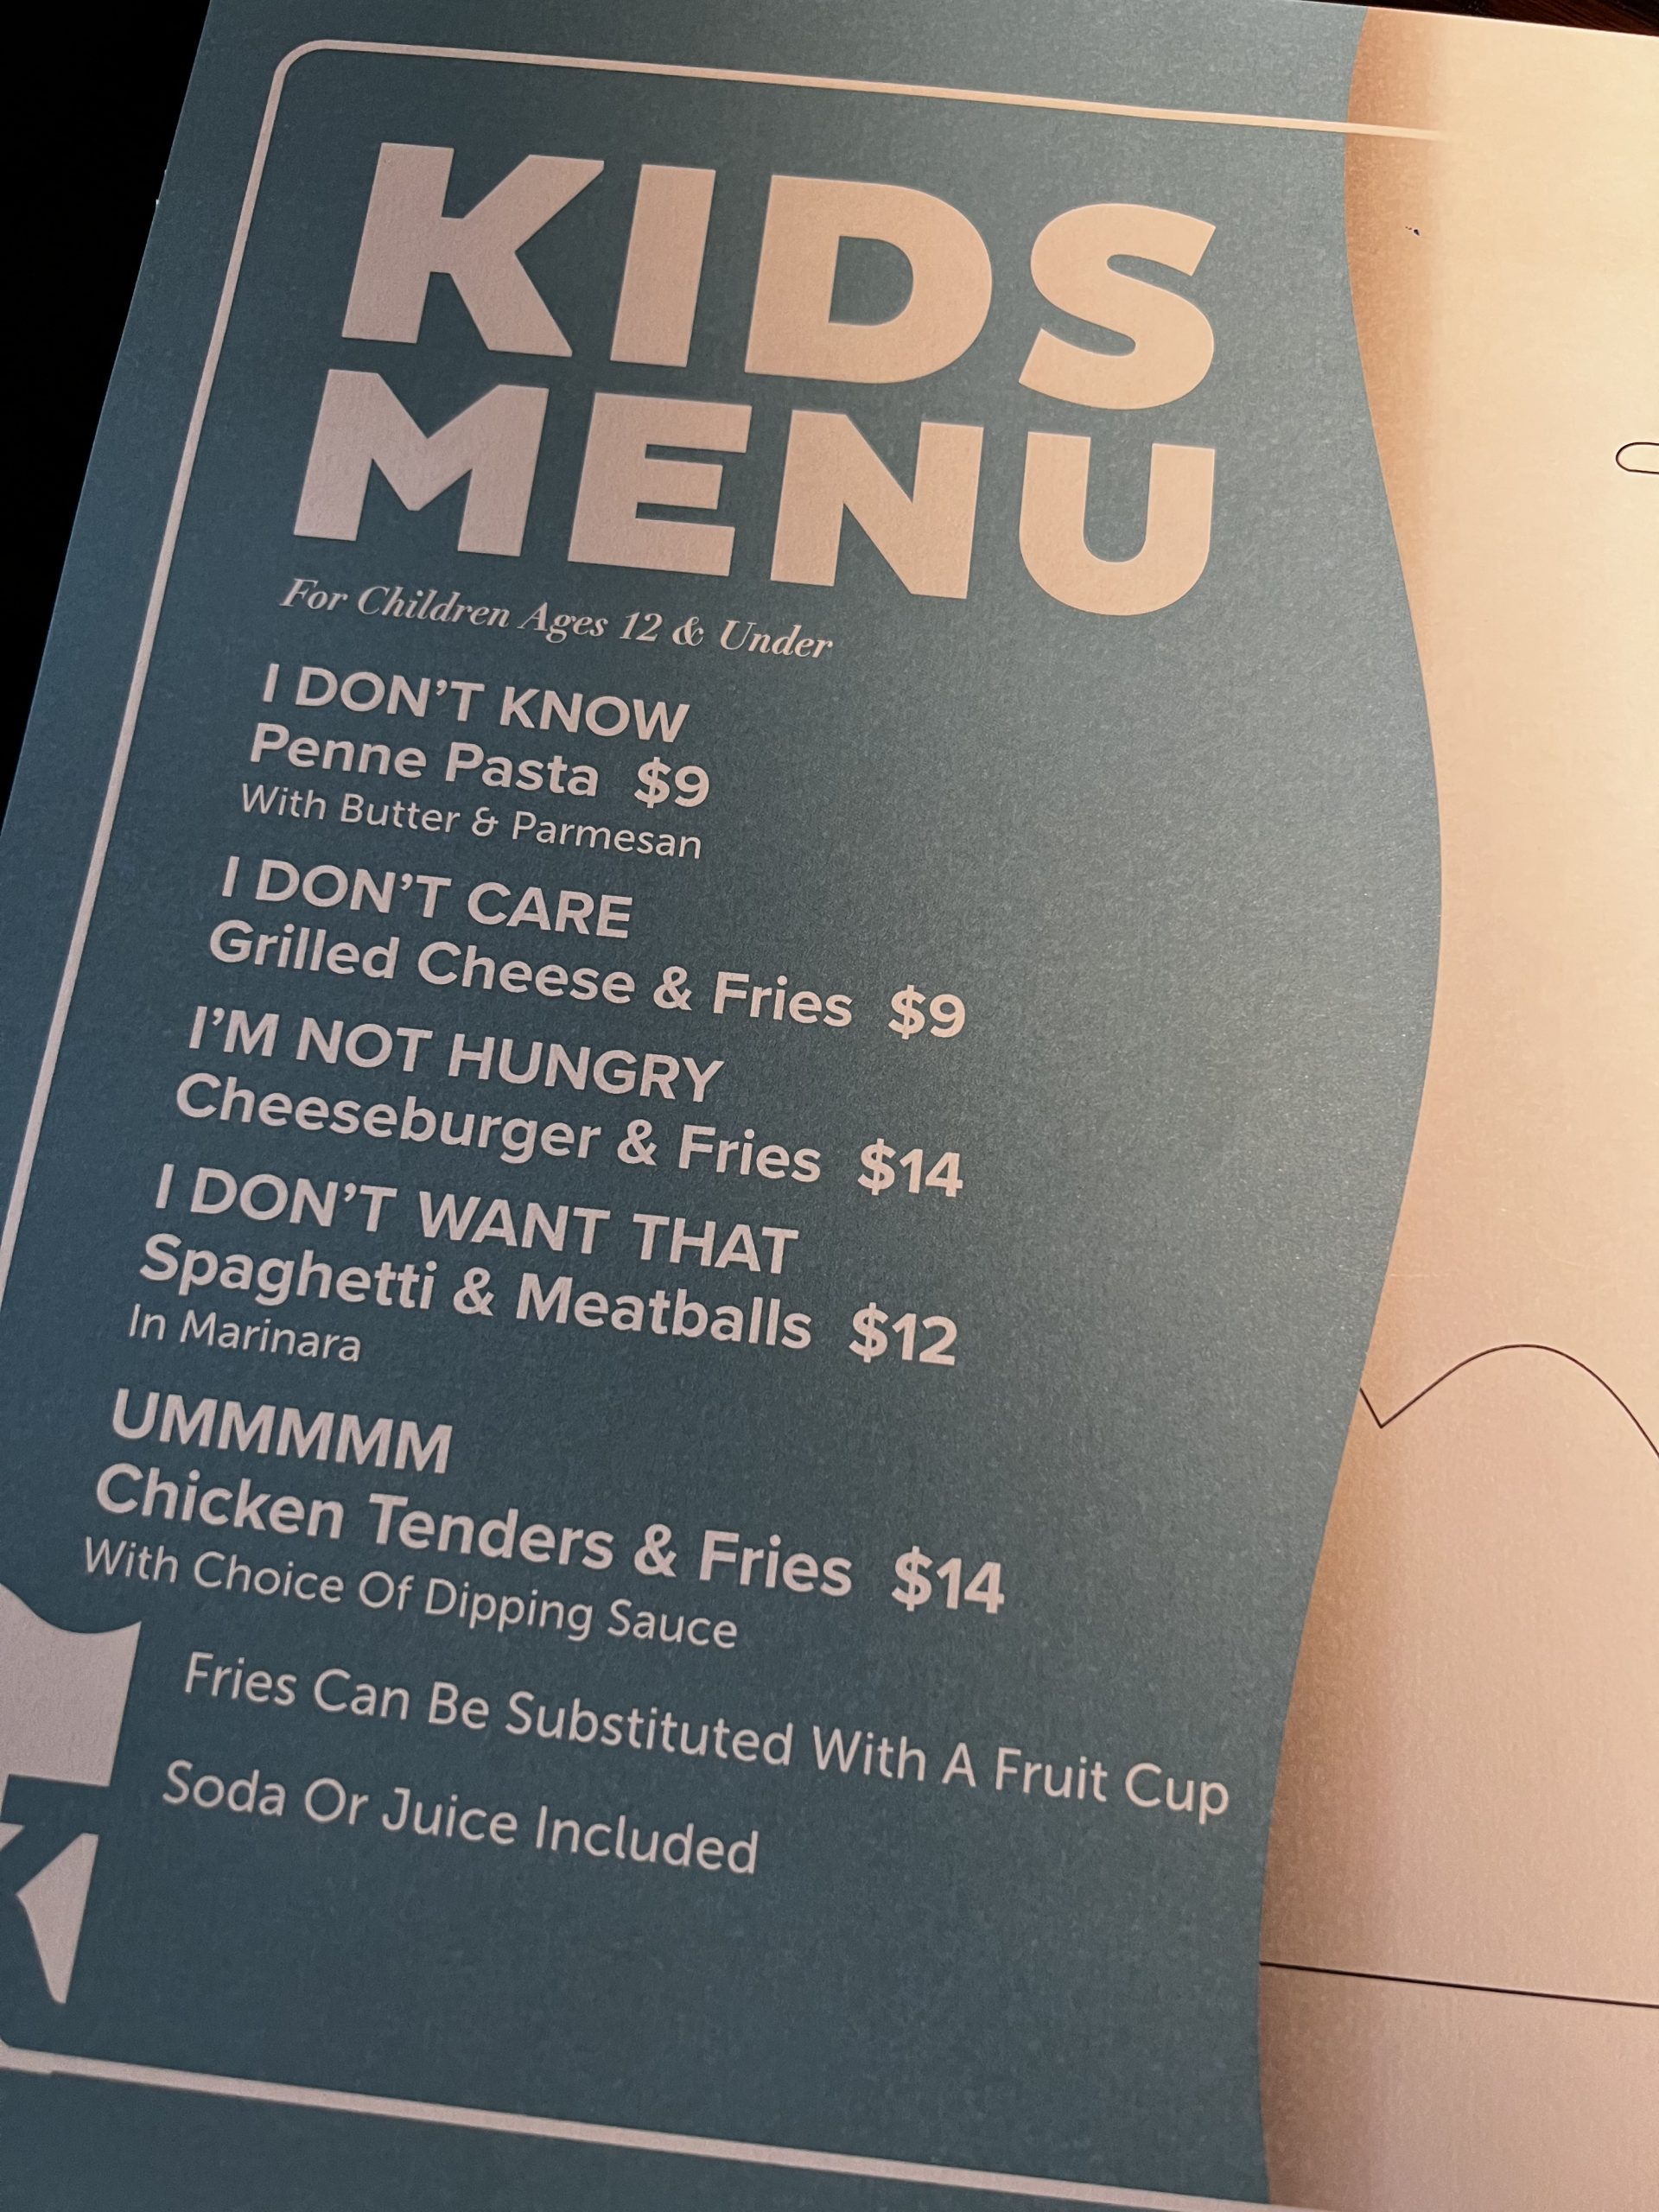 The kids' menu.